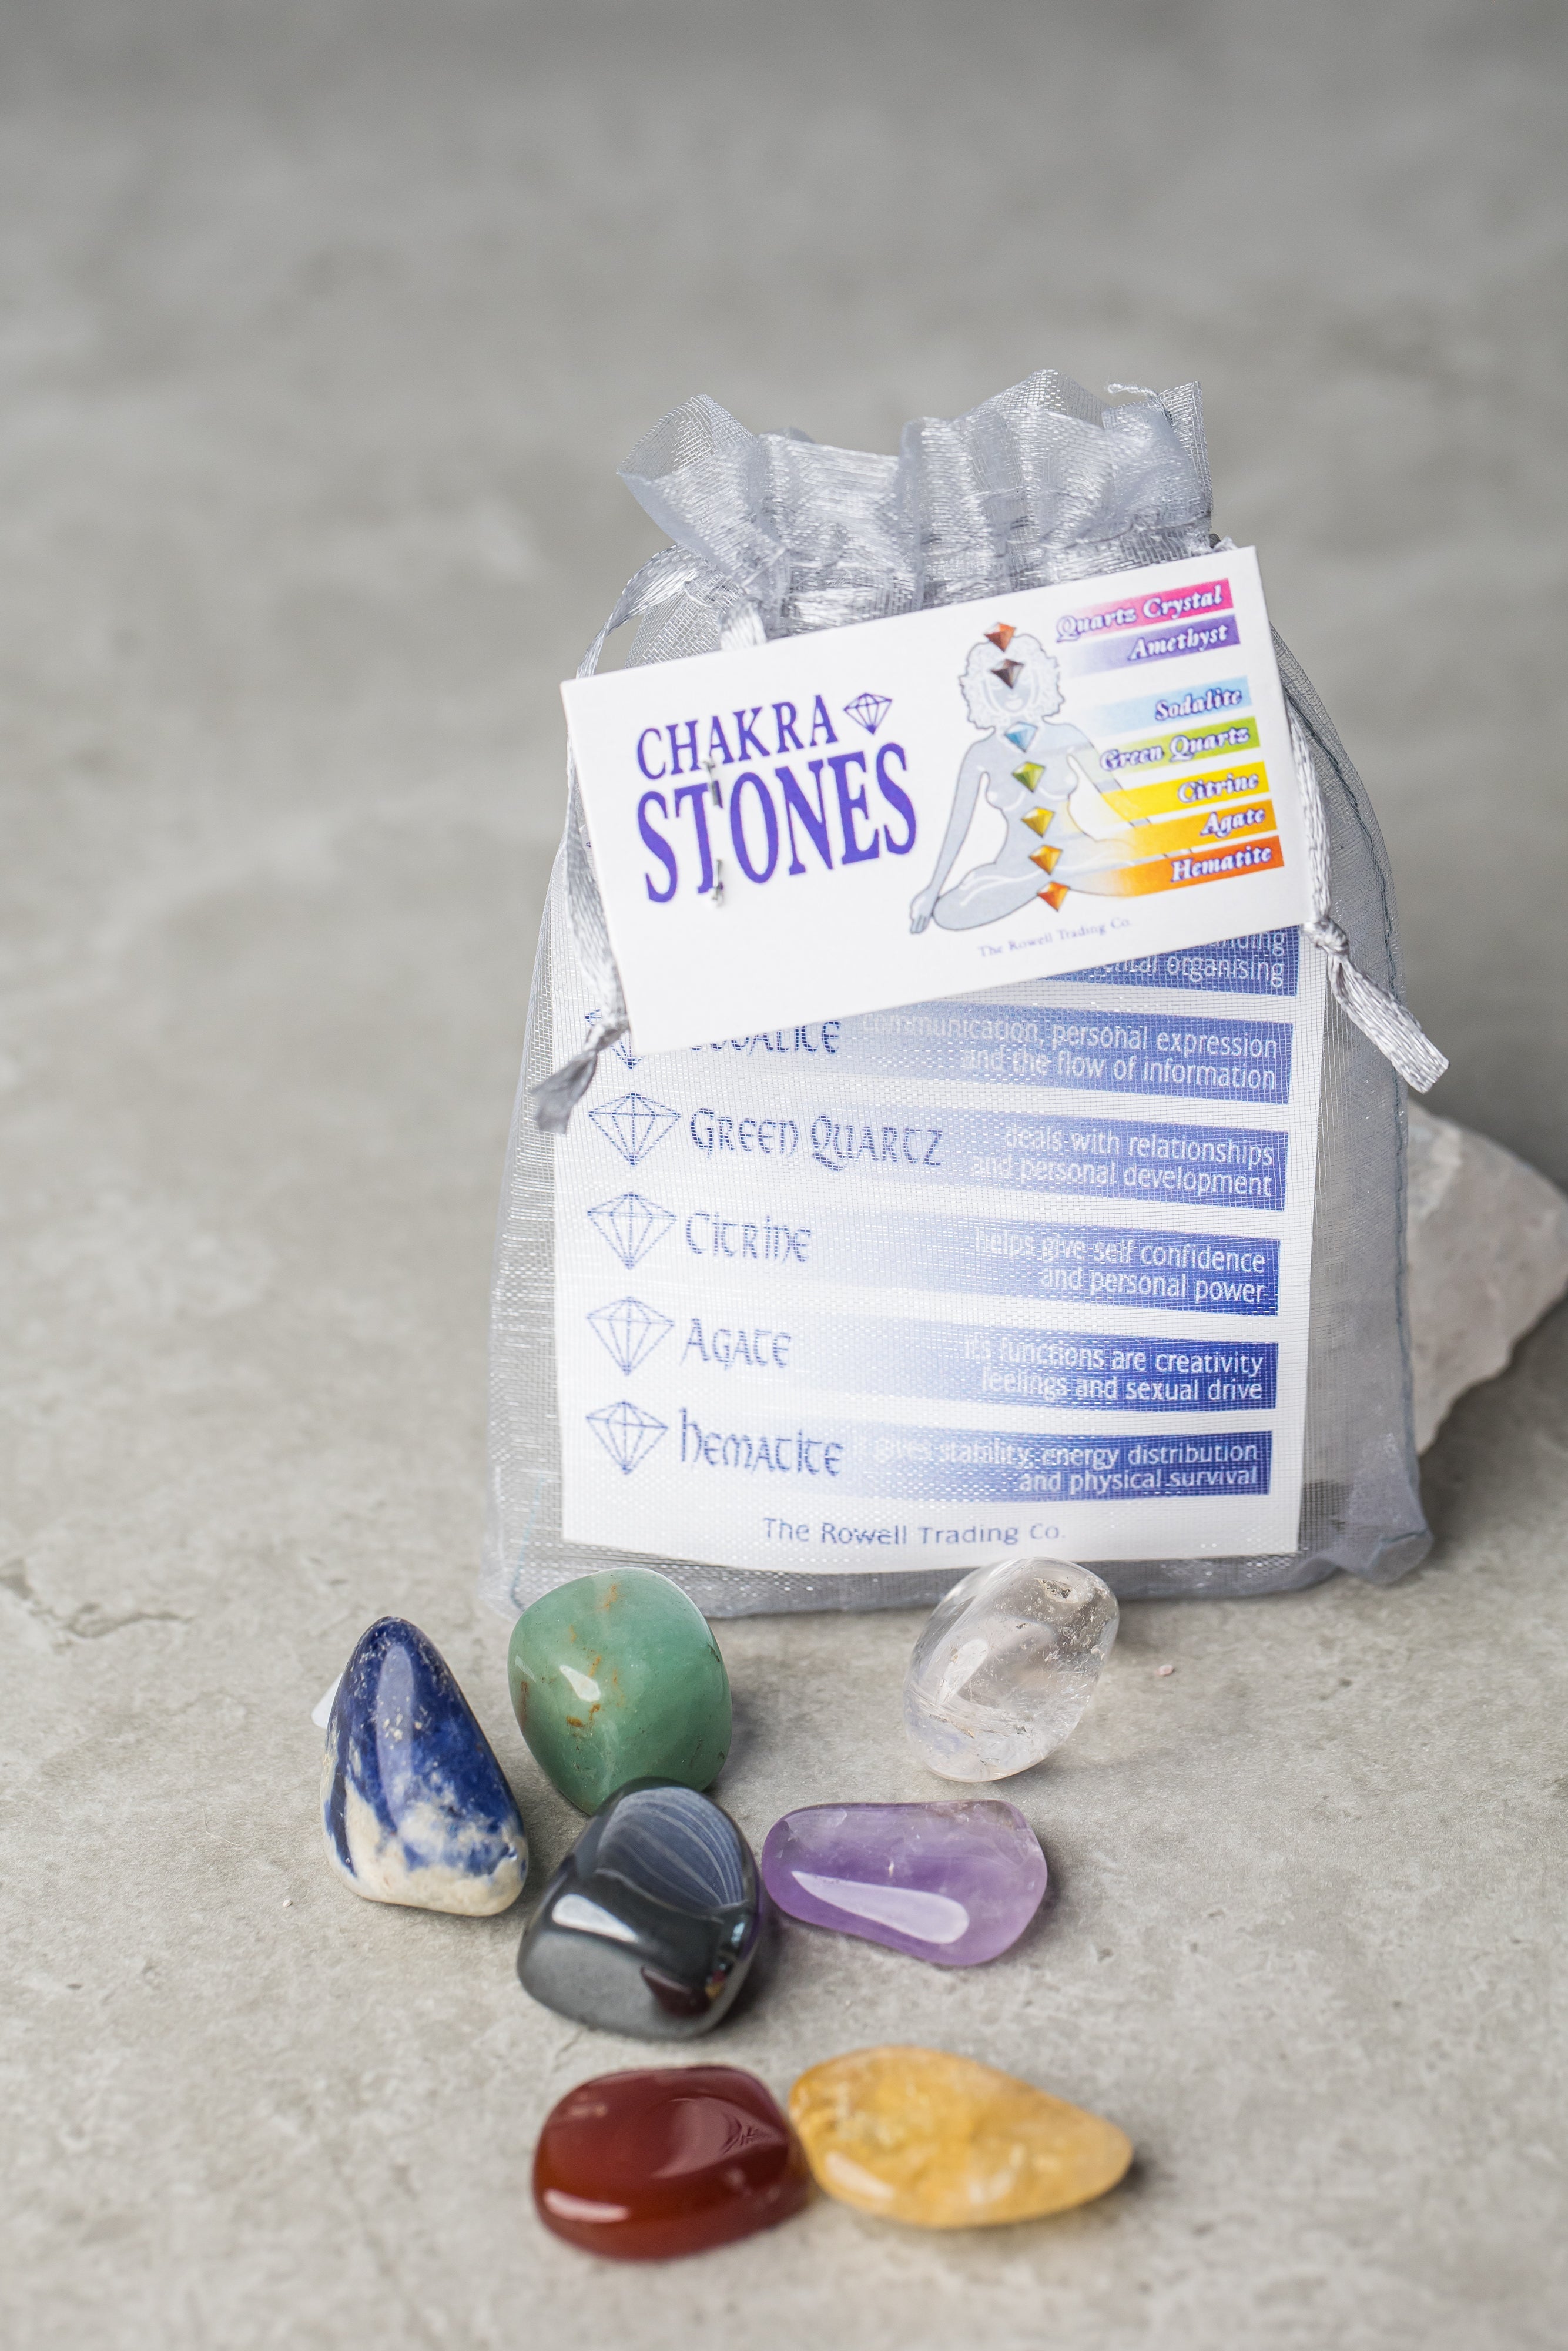 7 Chakra Crystal Aromatherapy Bracelet - Healing Stones for You